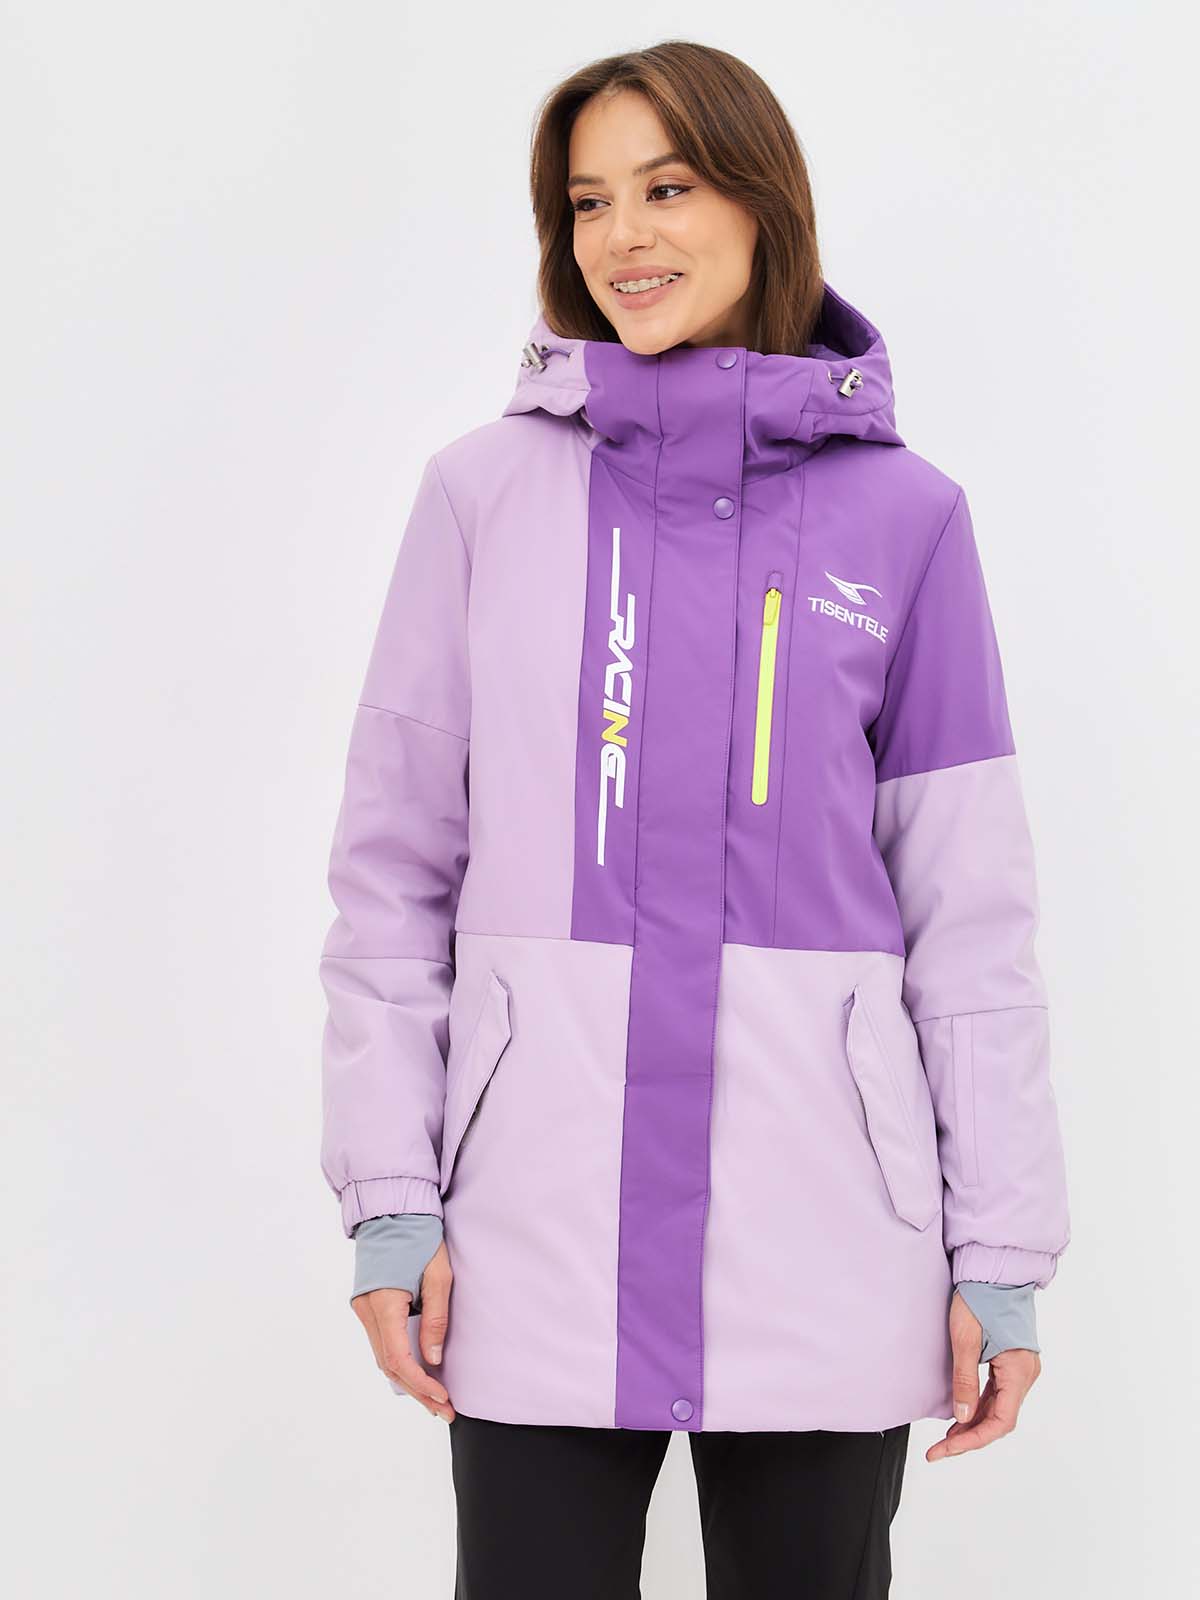 Куртка Tisentele Фиолетовый, 847682 (50, xxl)